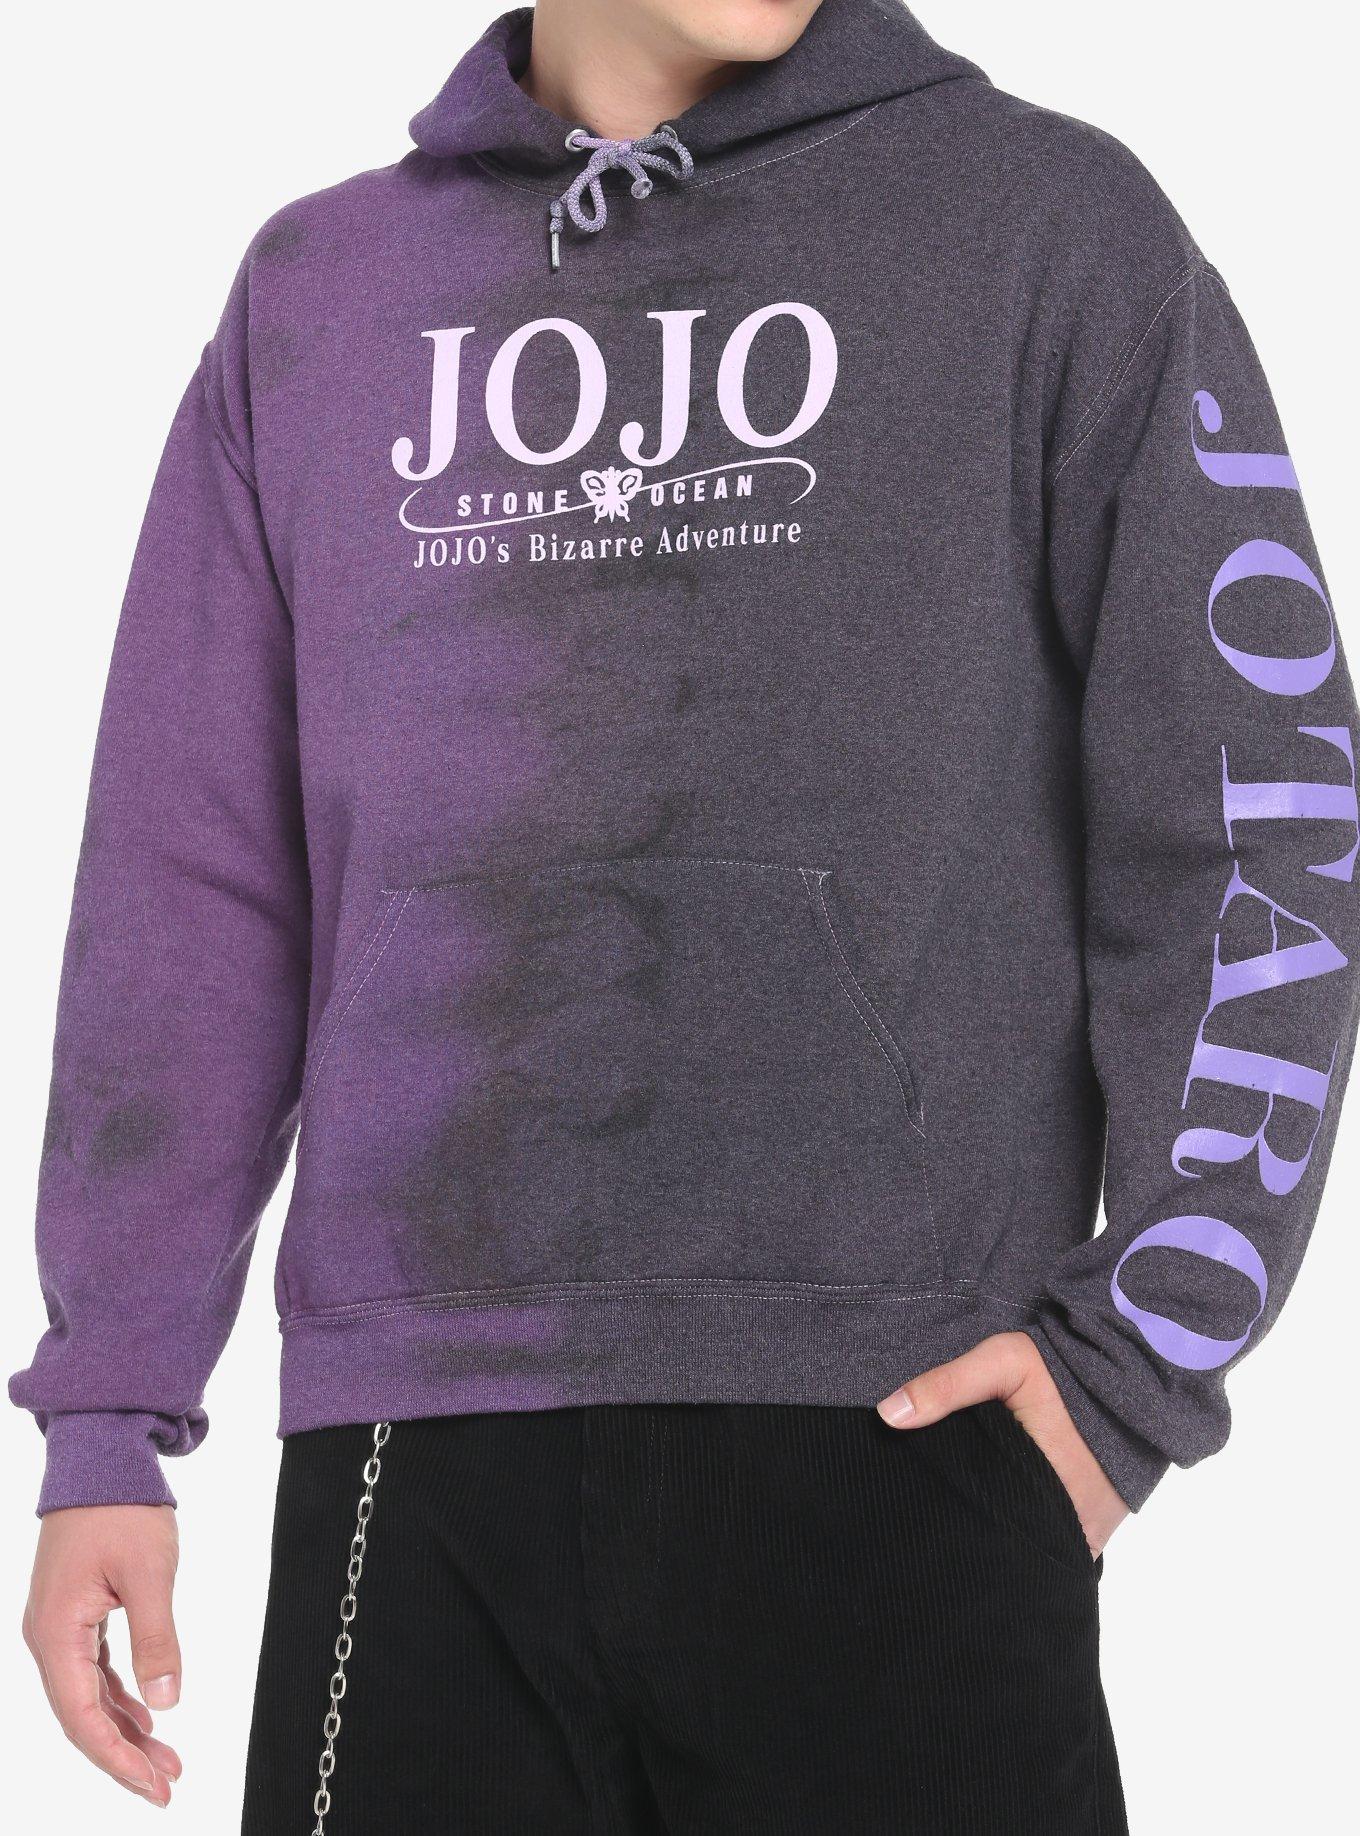 Stand tall with JoJo's Bizarre Adventure hoodies